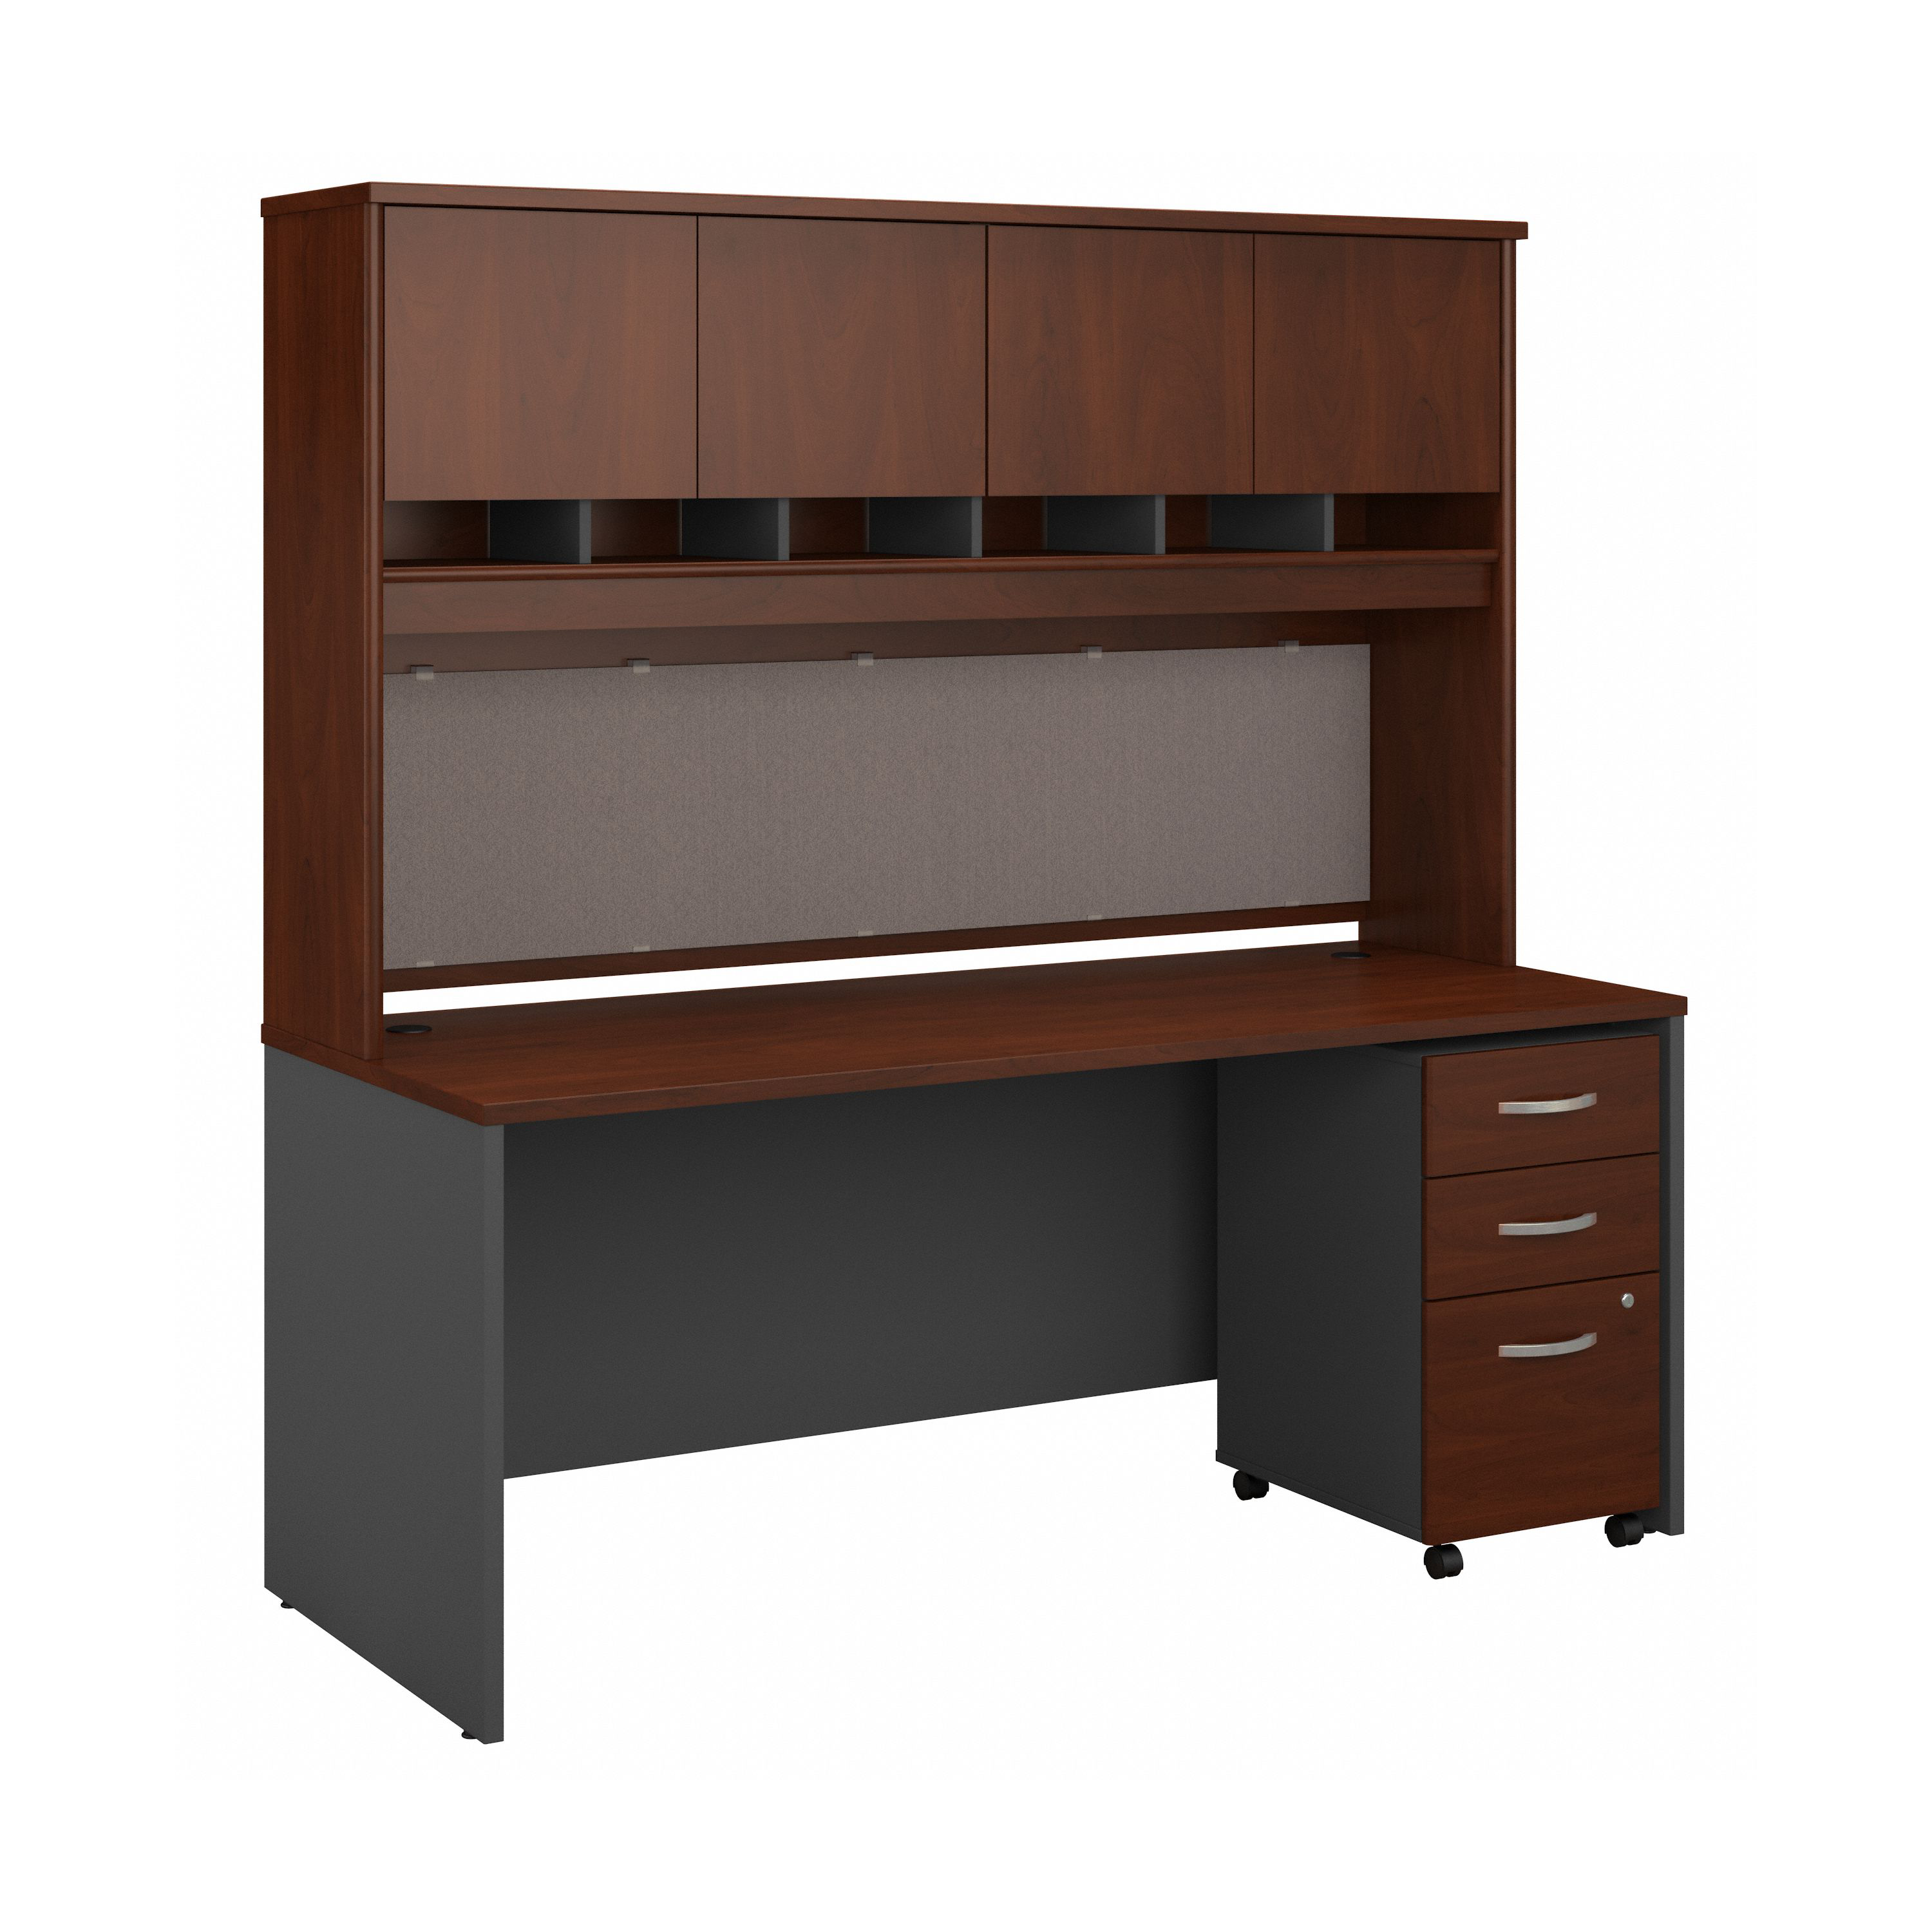 Shop Bush Business Furniture Series C 72W x 30D Office Desk with Hutch and Mobile File Cabinet 02 SRC080HCSU #color_hansen cherry/graphite gray